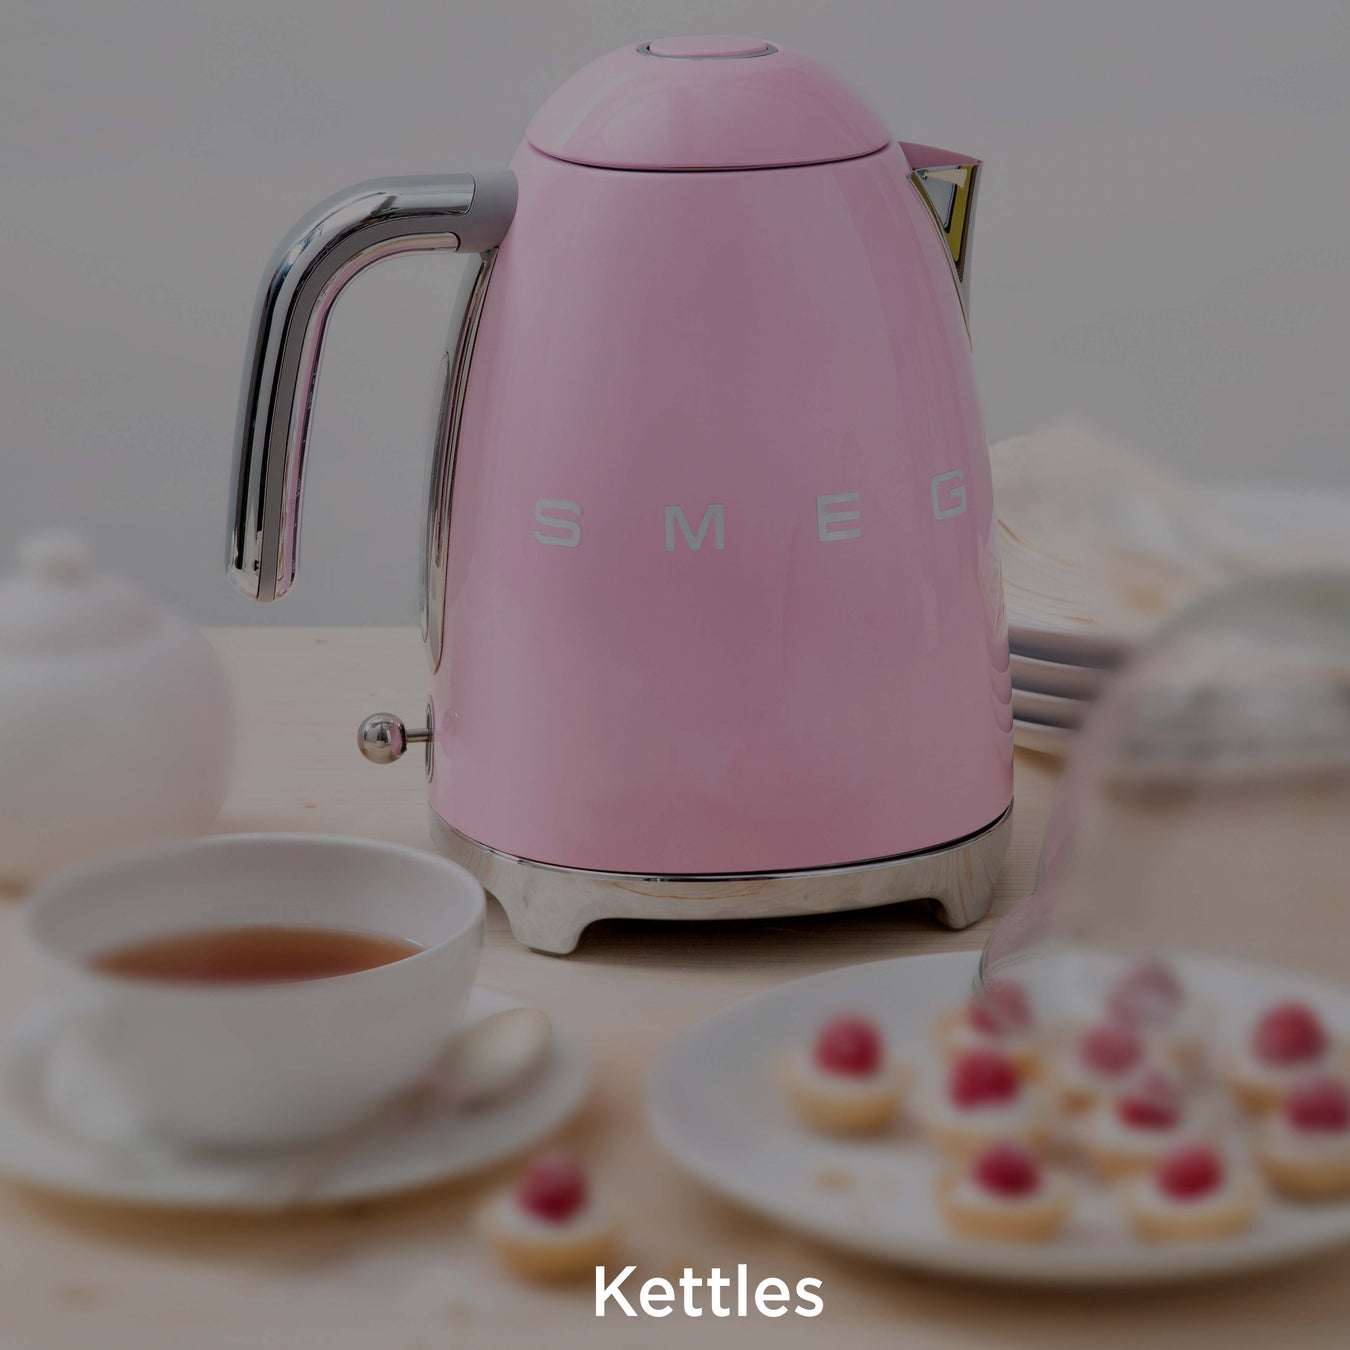 Smeg Electric Kettle - Retro Style (Pink)